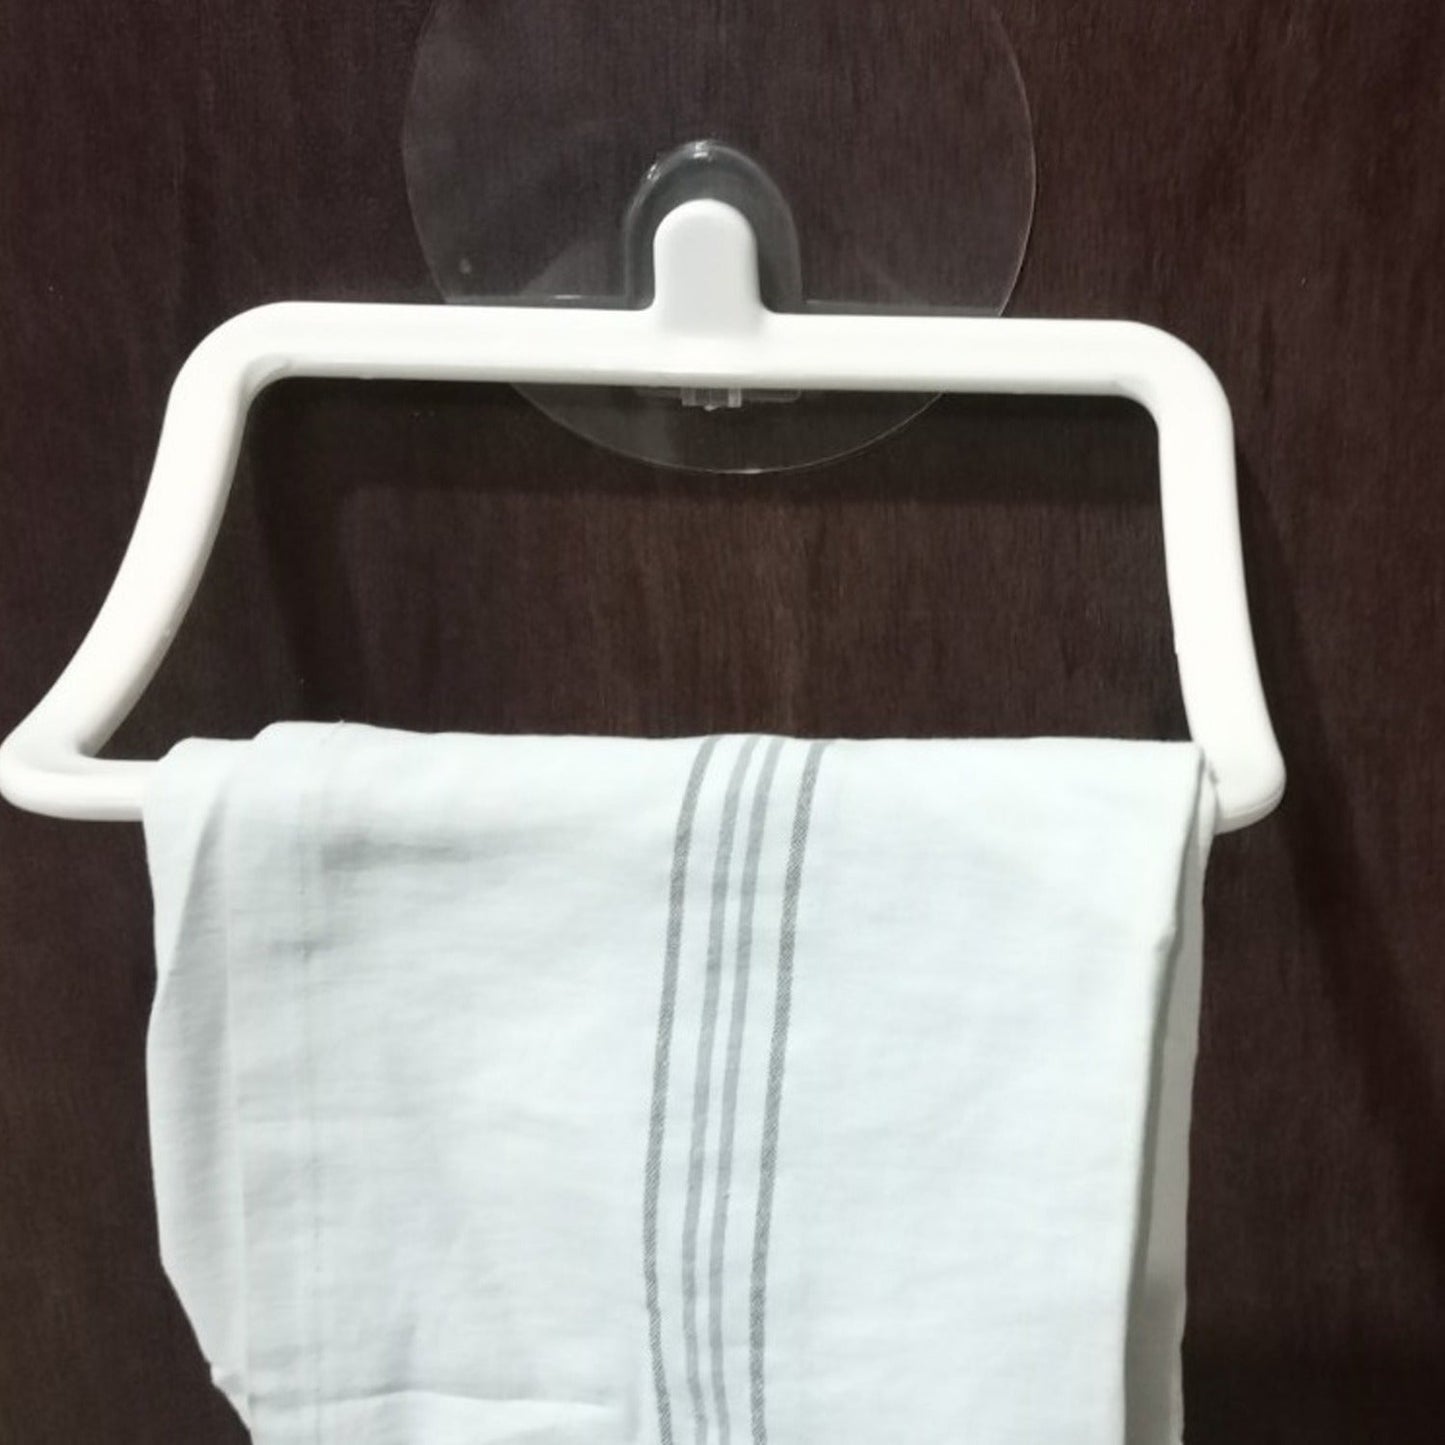 4096 Multi-Purpose Self Adhesive, Strong Sticker Self Adhesive Wall Mounted Hand Towel Holder/Hanger